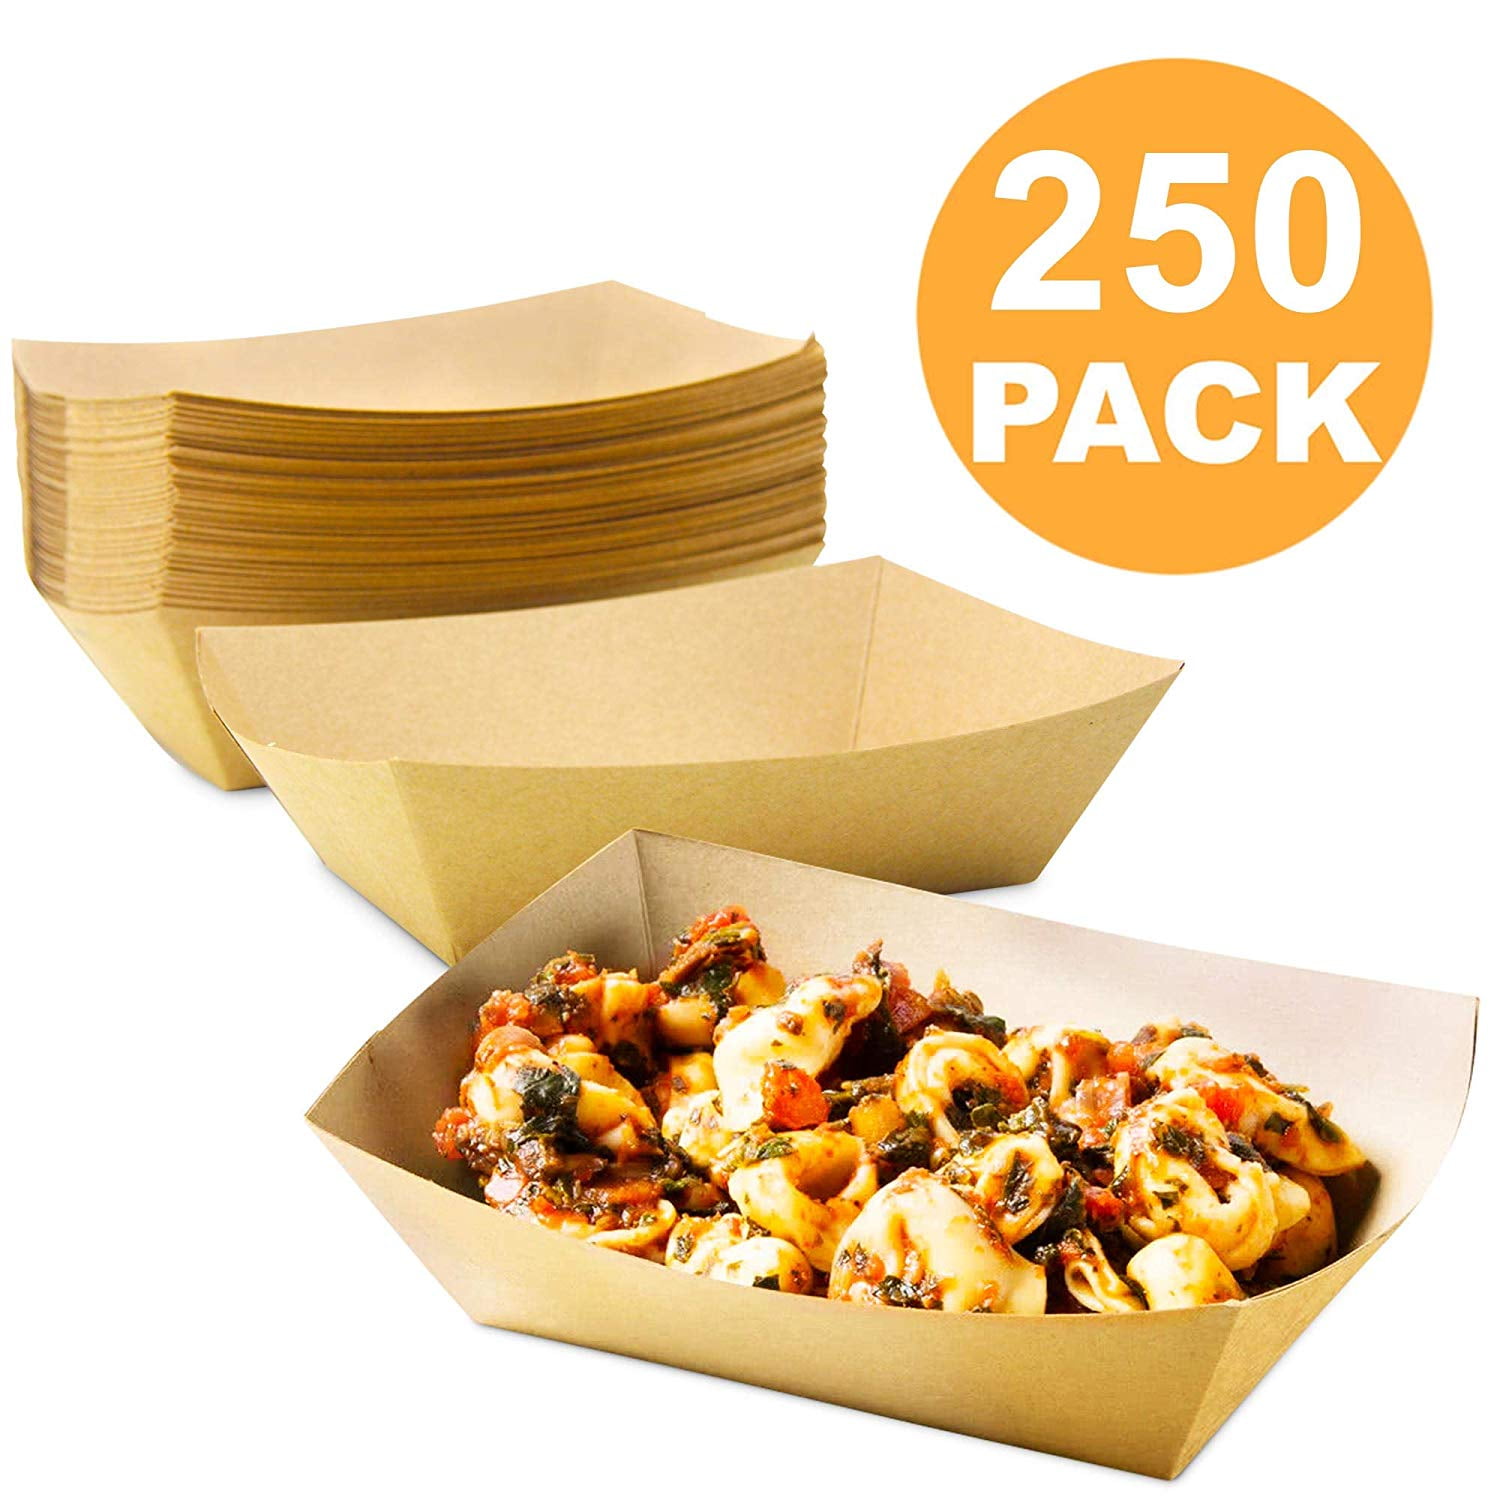 500 Paper Food Tray 3lb Fries Nacho Popcorn Hot Dog Concession #300 